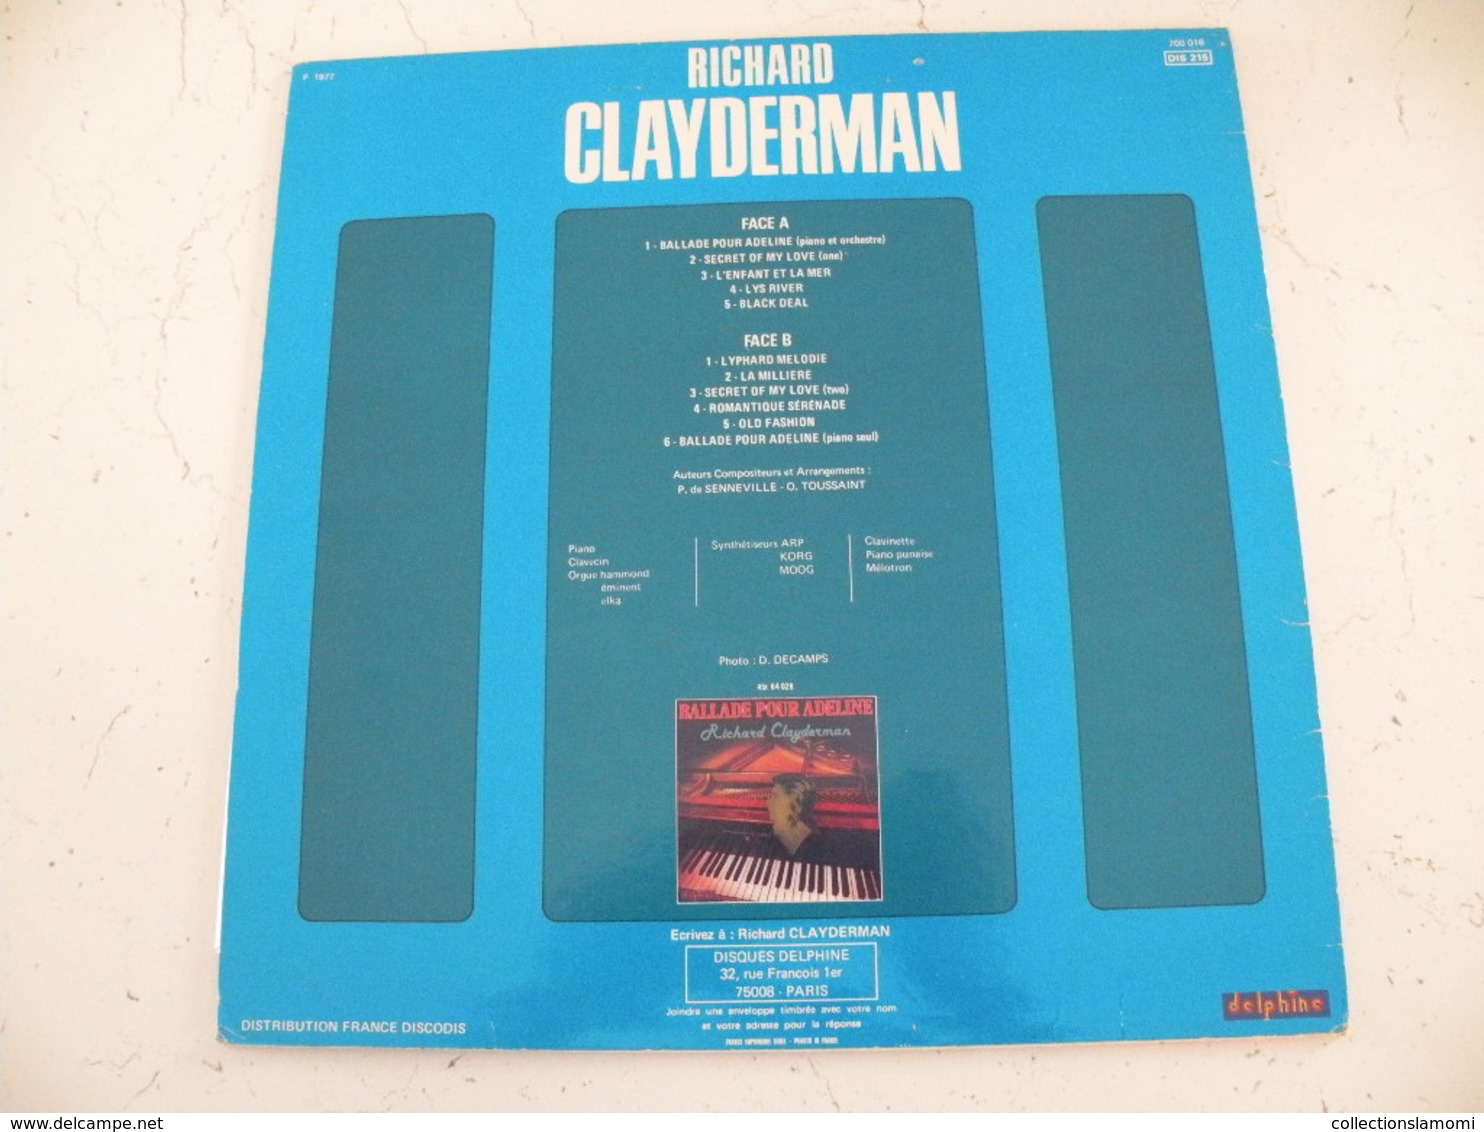 Richard Clayderman 1977 -  (Titres Sur Photos) - Vinyle Album 33T - Instrumental